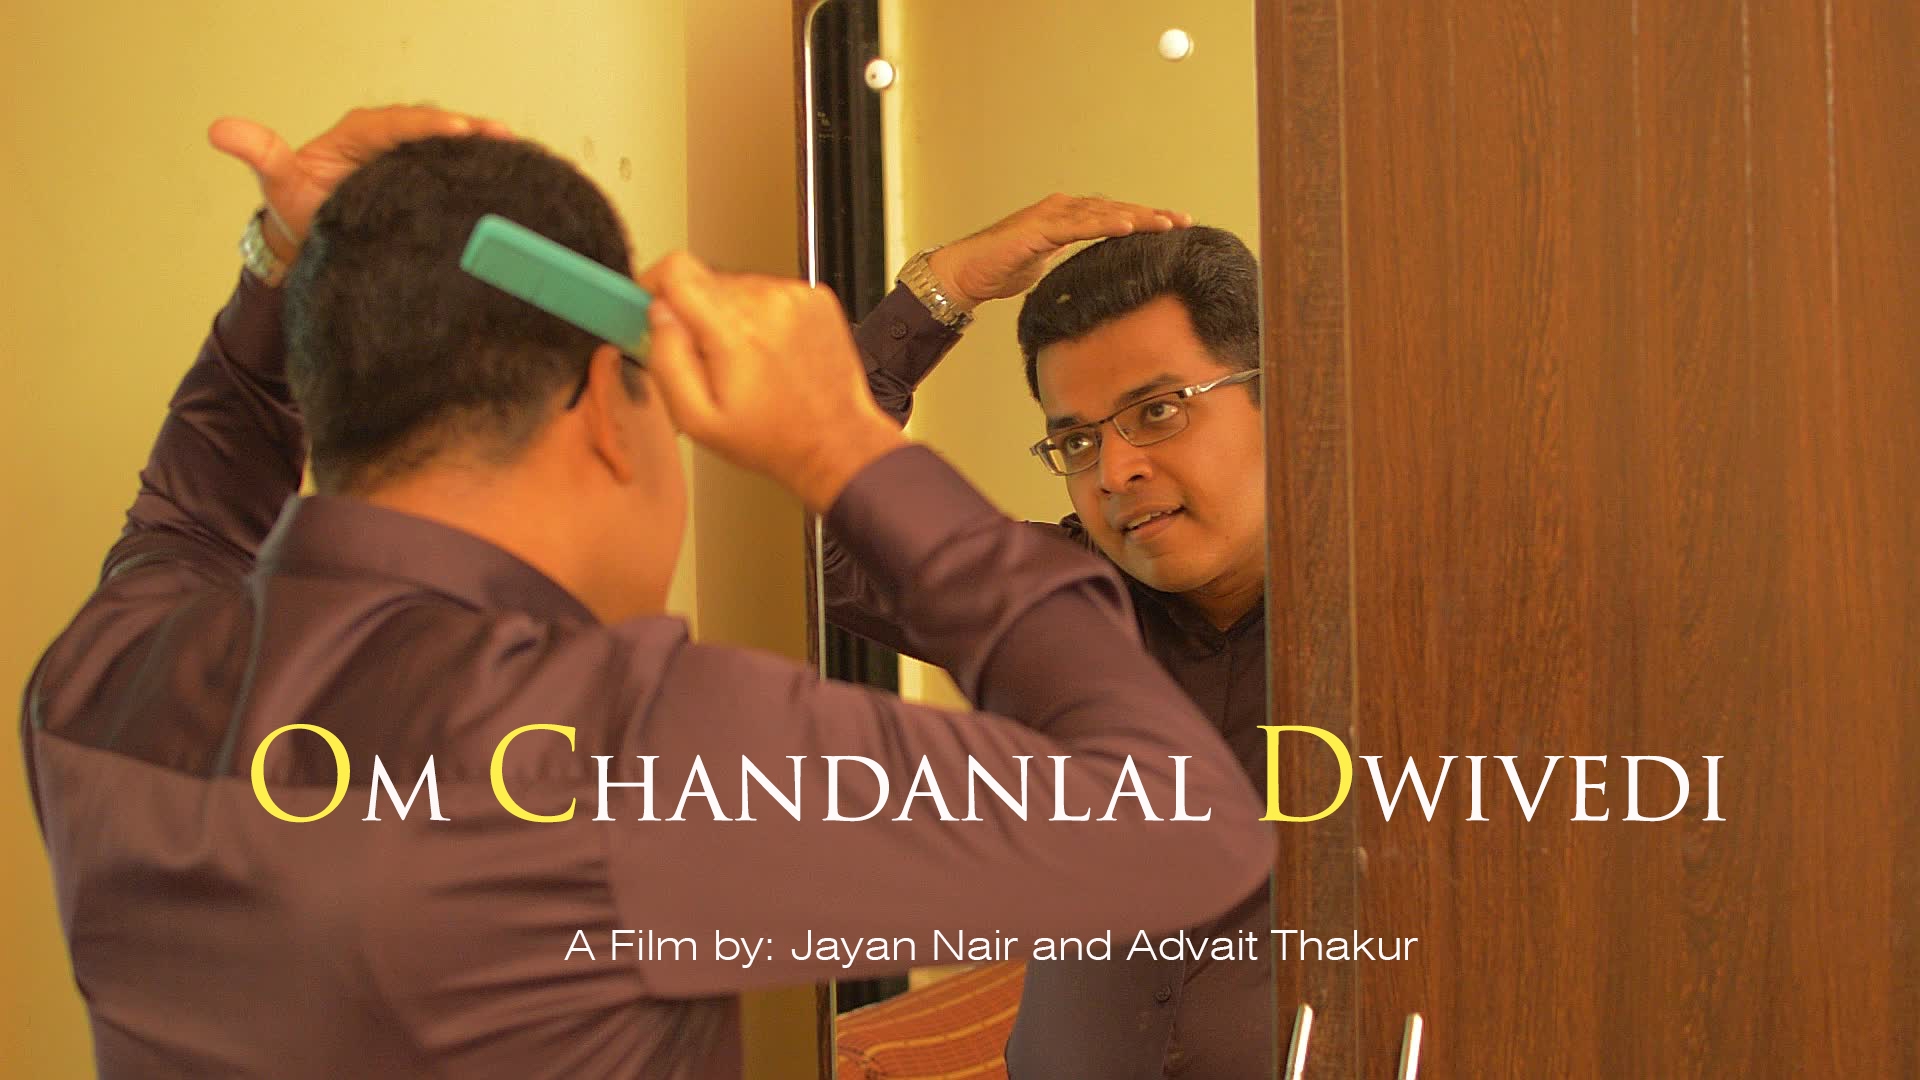 'Om Chandanlal Dwivedi' - OCD